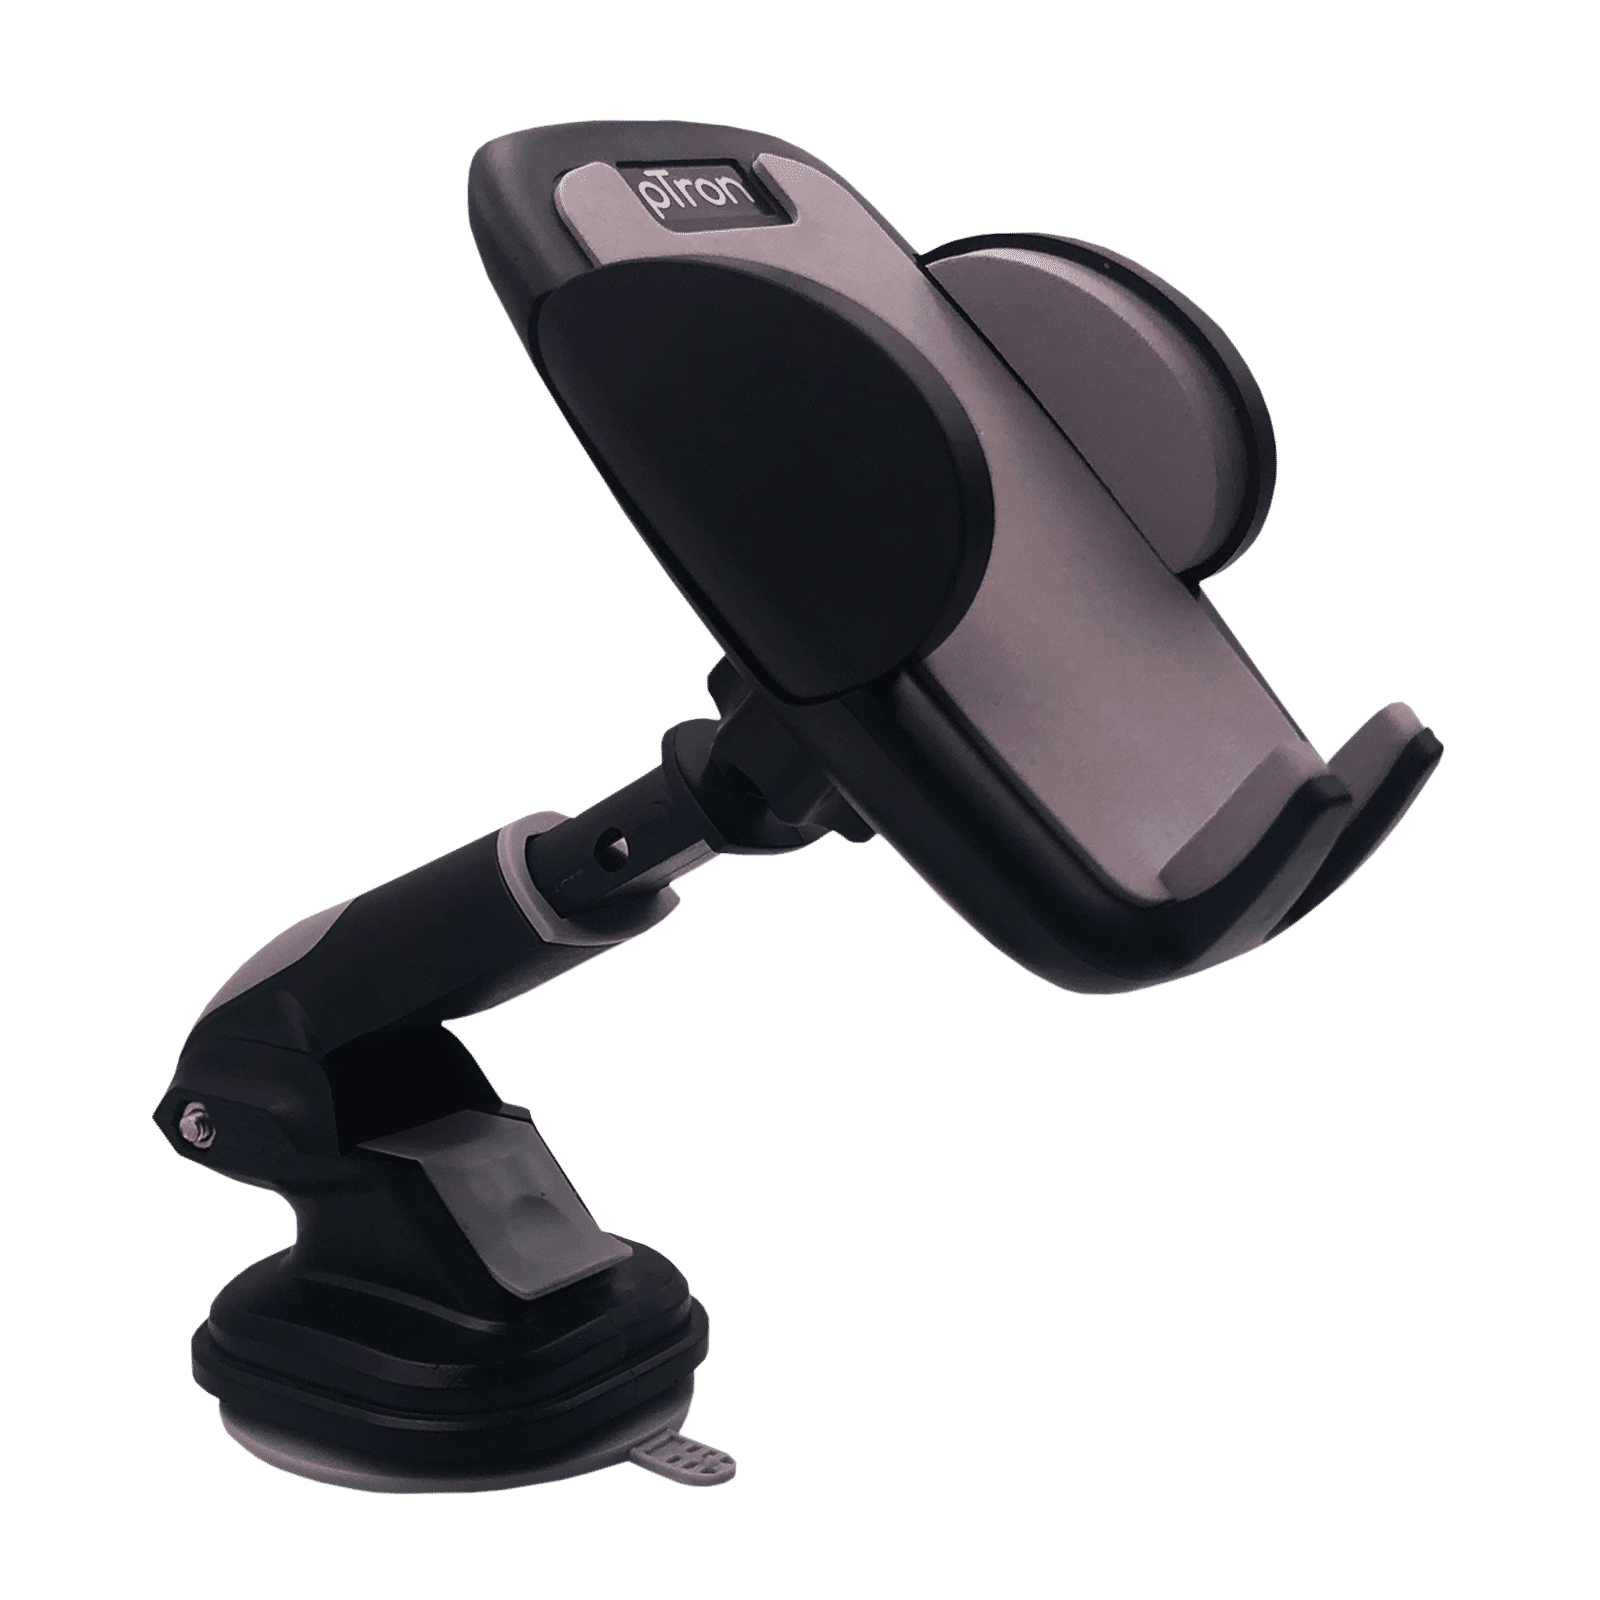 TOPK Car Phone Holder - Adjustable Car Phone Mount Cradle with 360